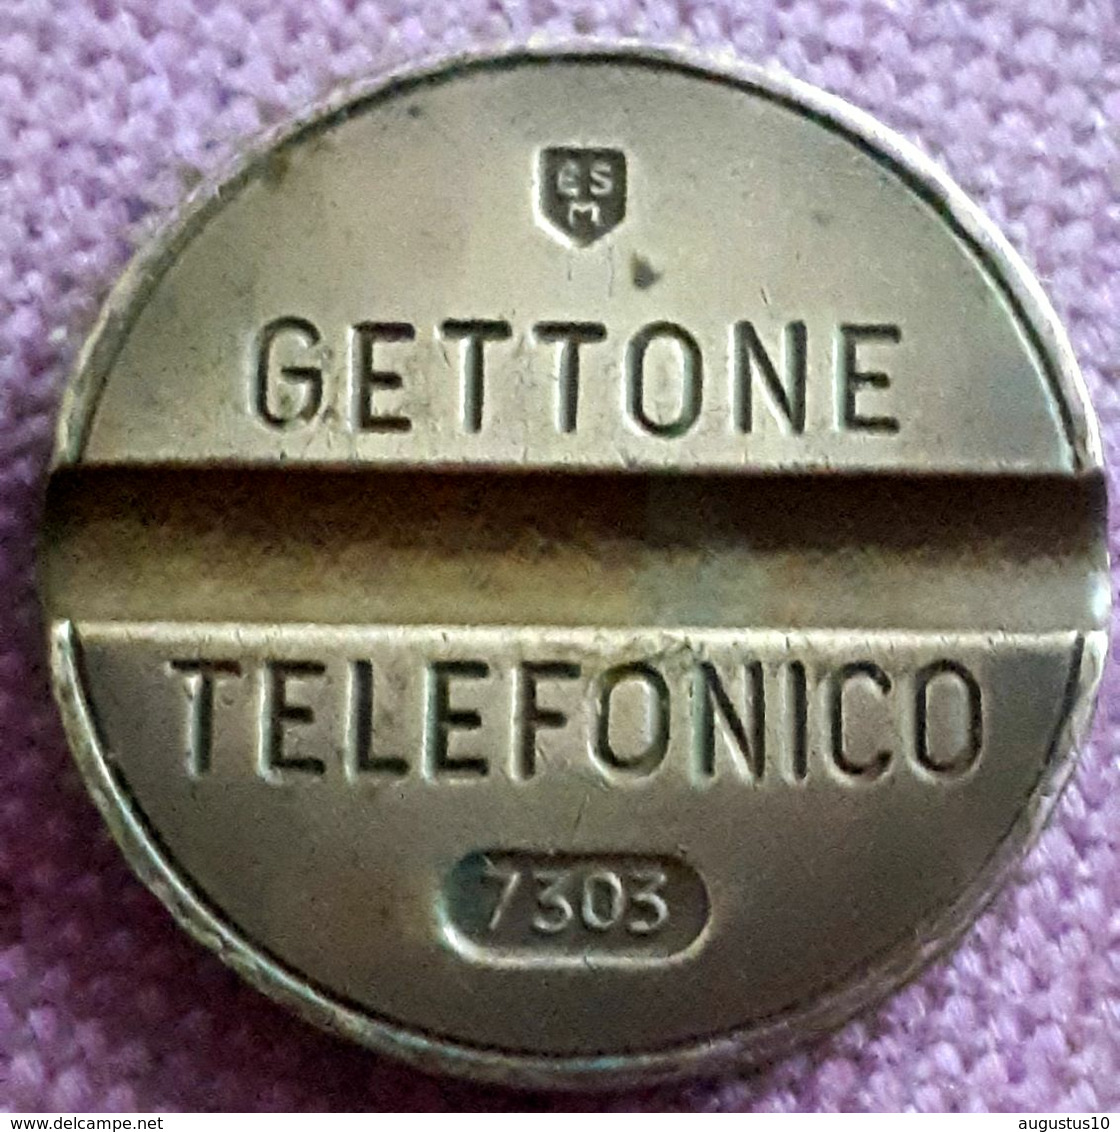 GETTONE TELEFONICO JETON ESM Milano SIGLIO 7303 - Monetary/Of Necessity